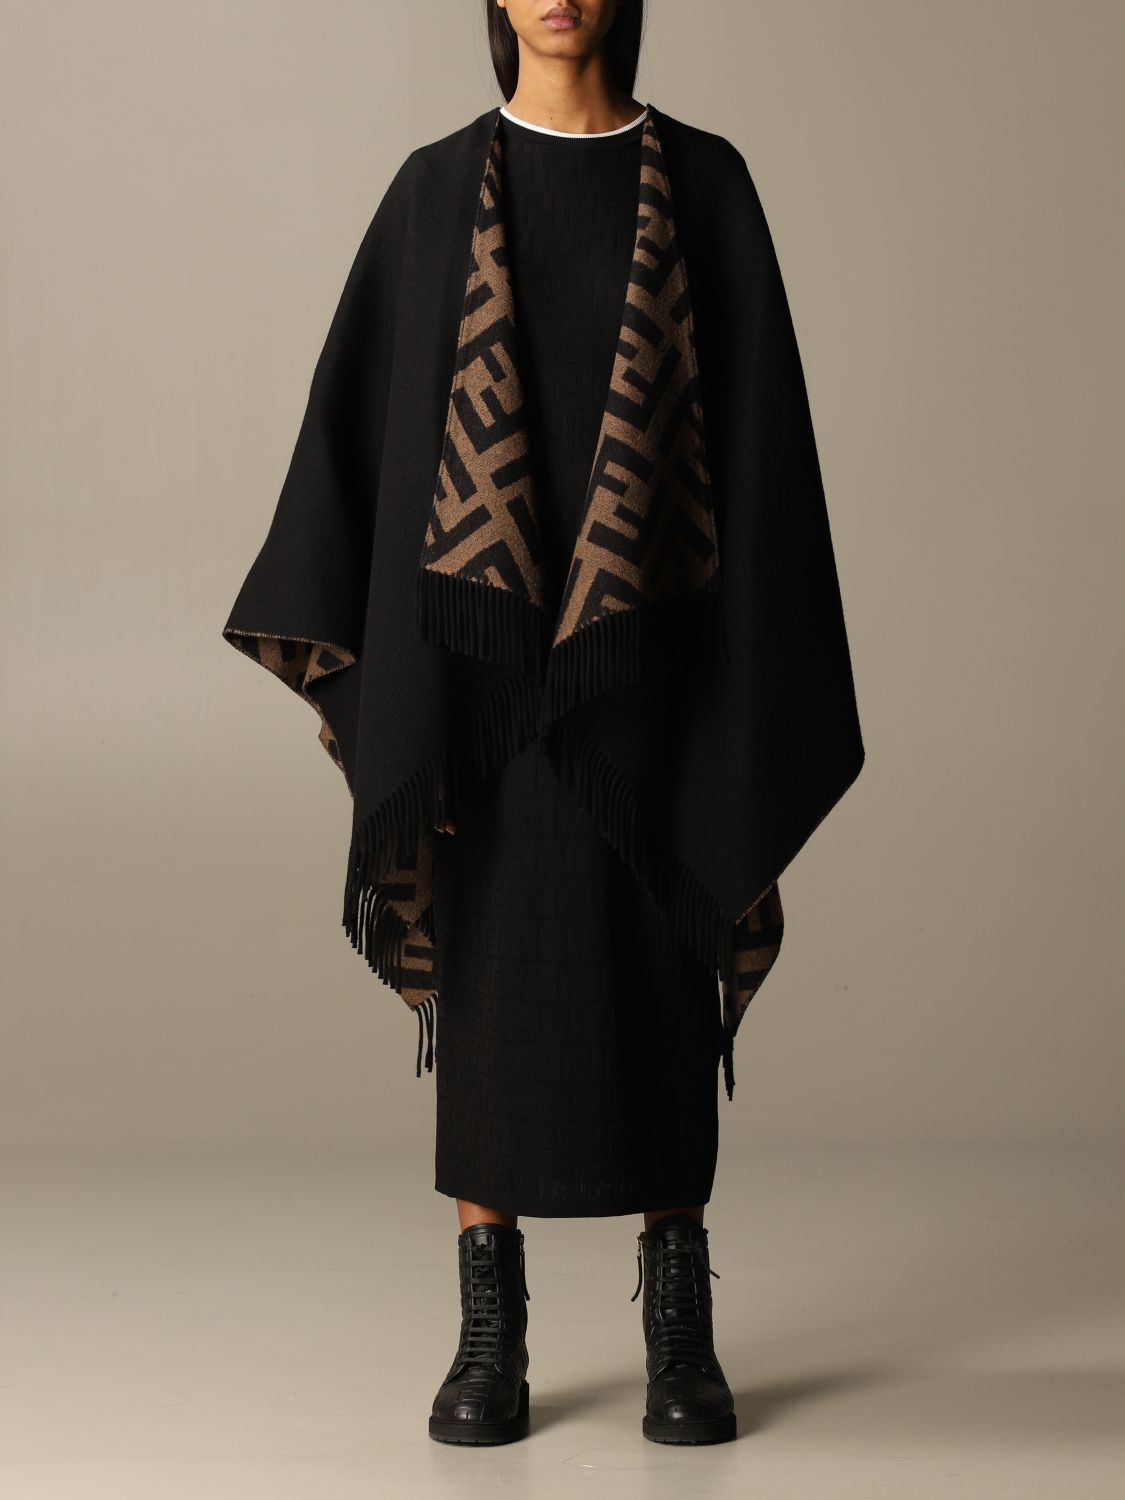 FENDI: Reversible wool with all-over ff logo - Black | Fendi cape